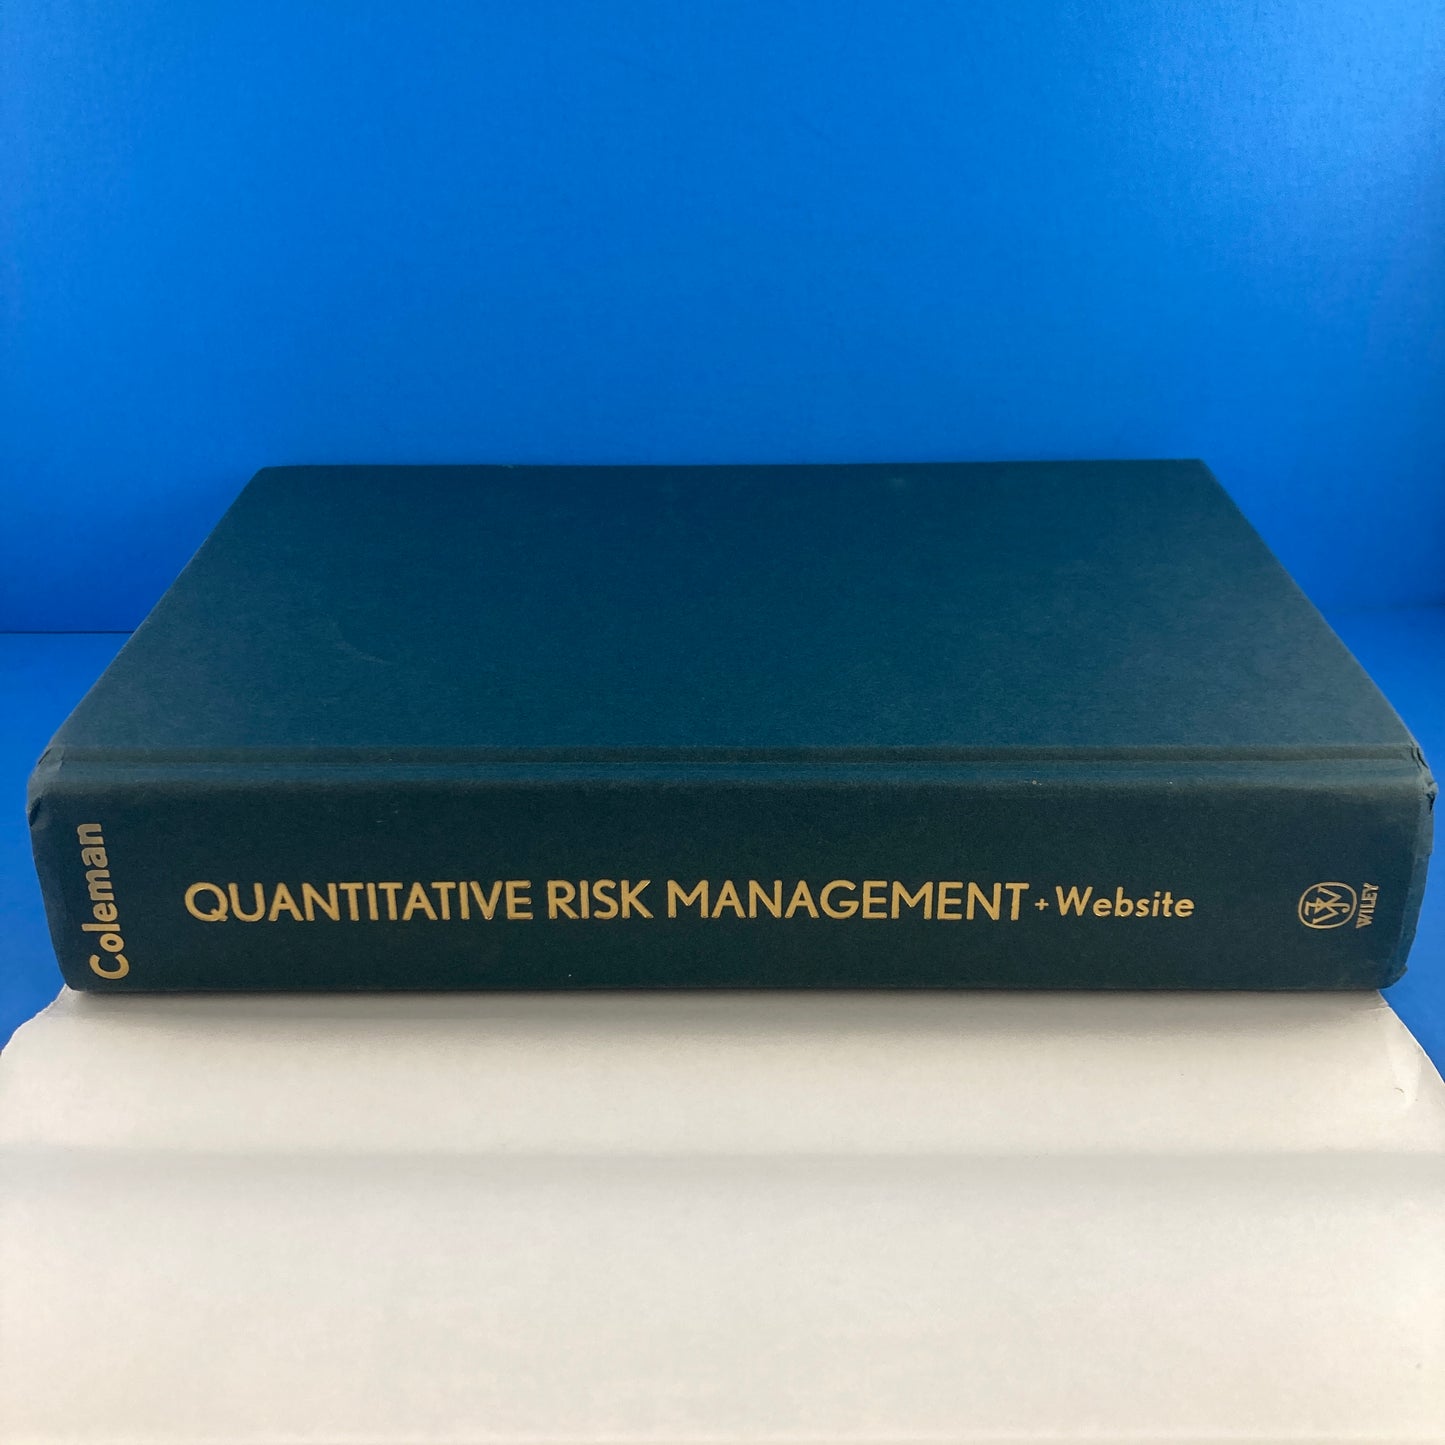 Quantitative Risk Management: A Practical Guide to Financial Risk